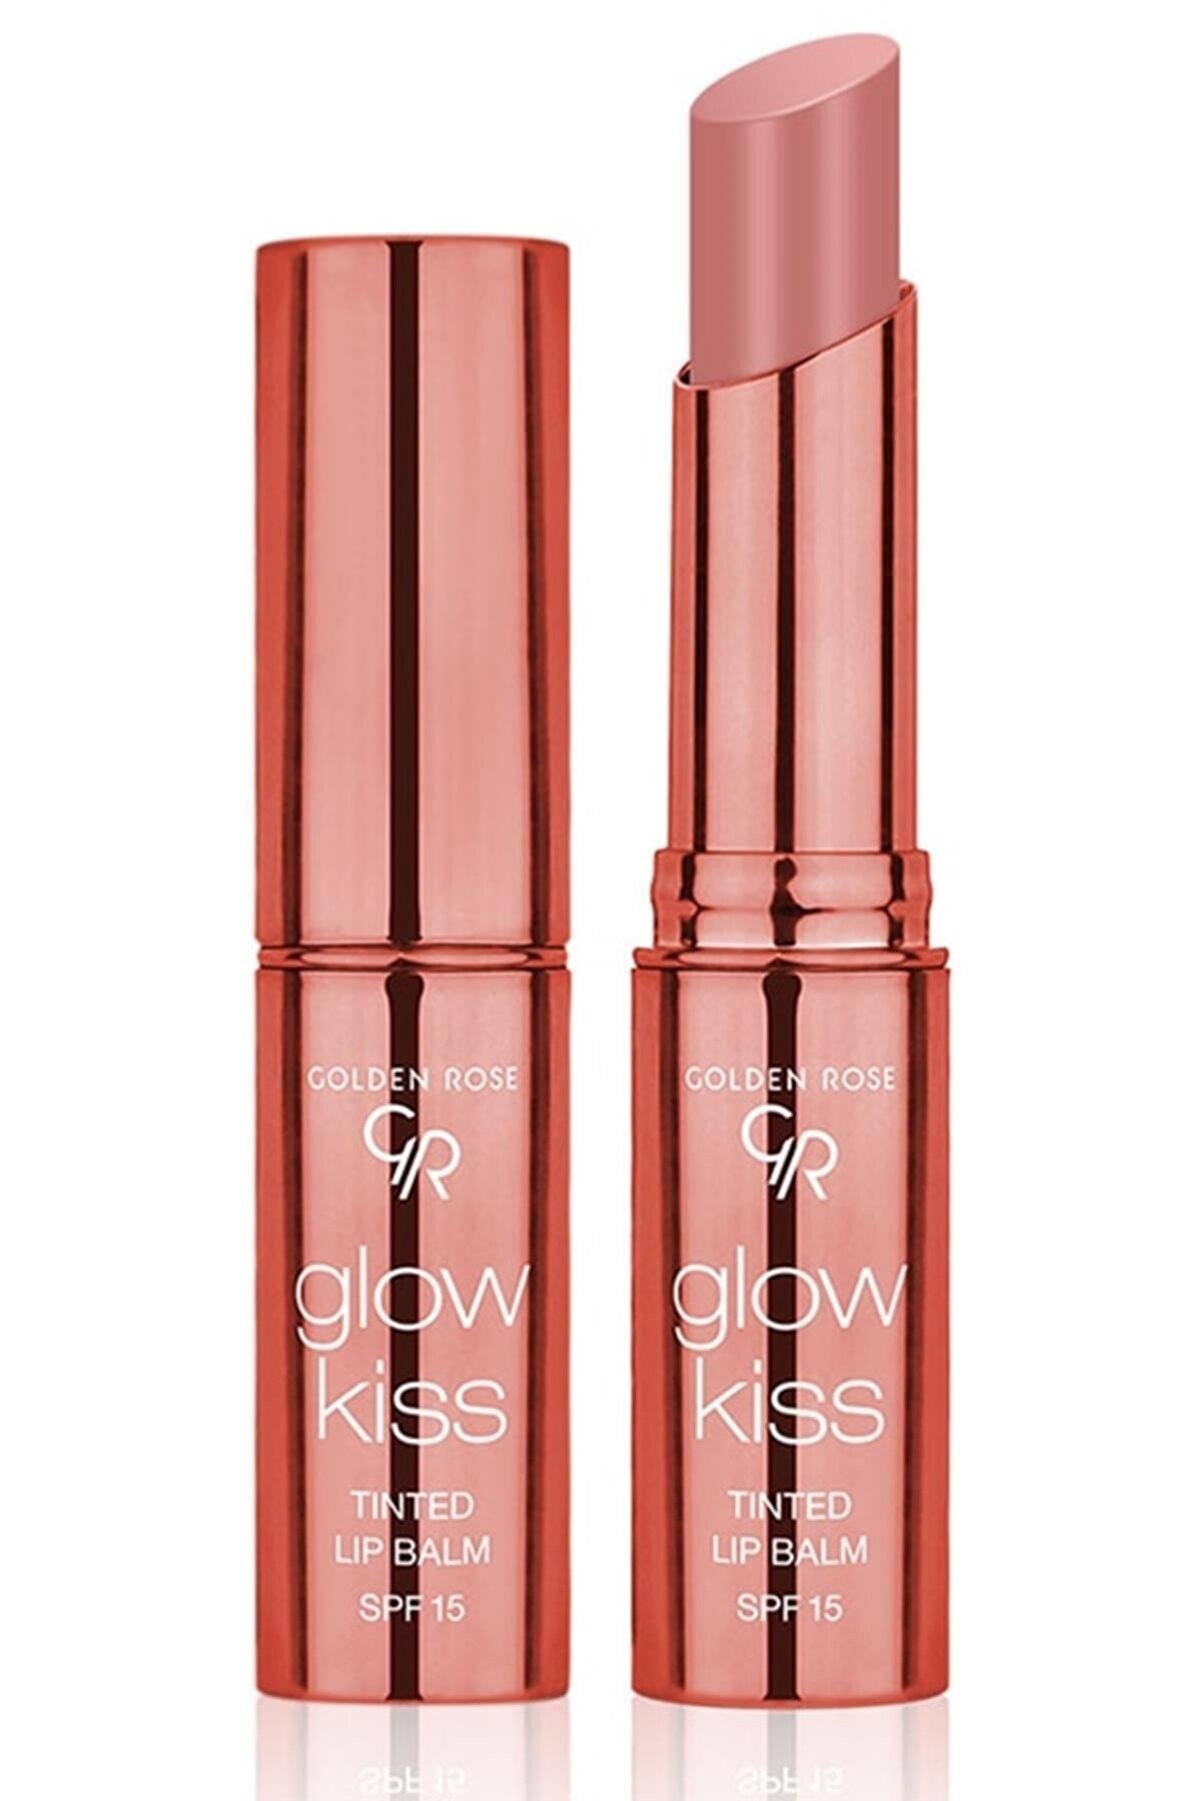 Golden Rose Glow Kiss Tinted Lip Balm Ruj 01 Vanilla Latt